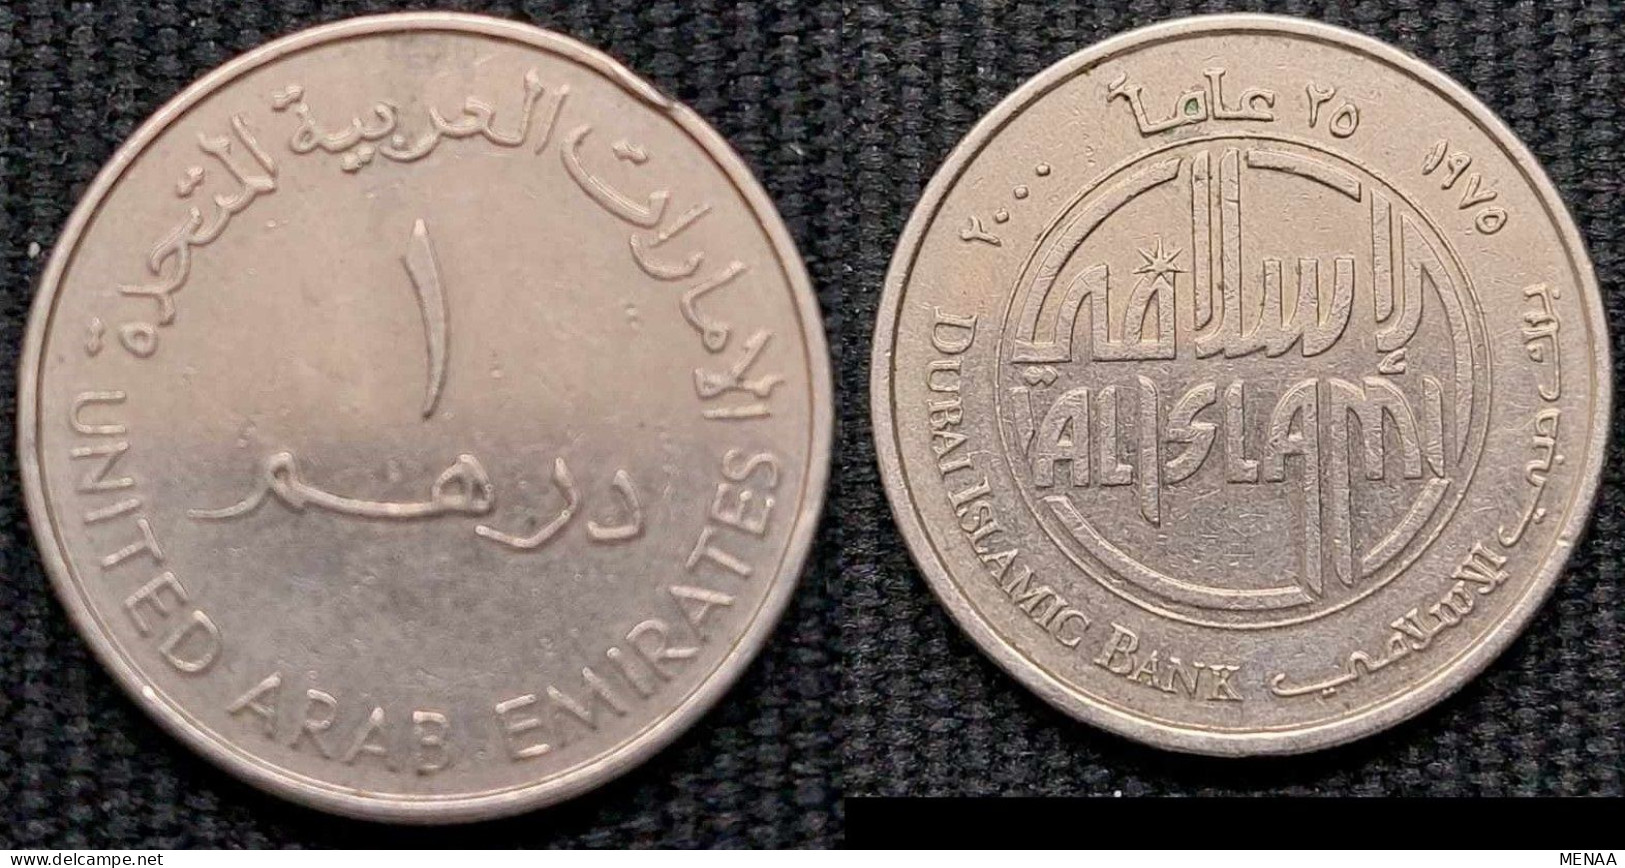 United Arab Emirates -1 Dirham -2000-The Silver Jubilee Of Dubai Islamic Bank - KM 43 - Ver. Arab. Emirate